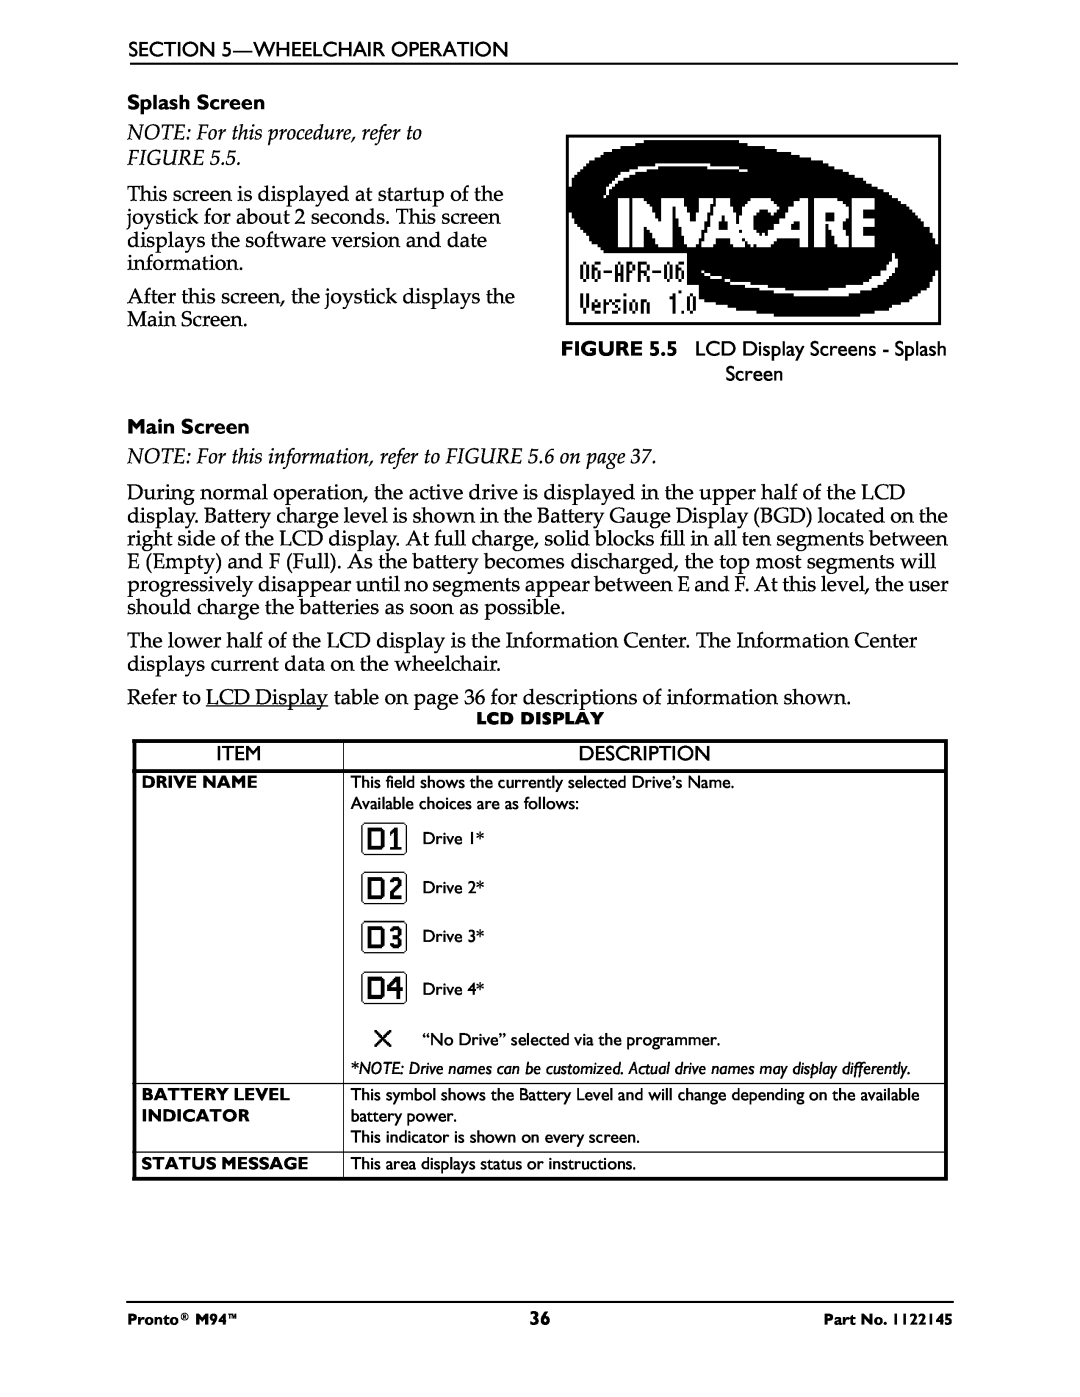 Invacare Pronto M71 manual 